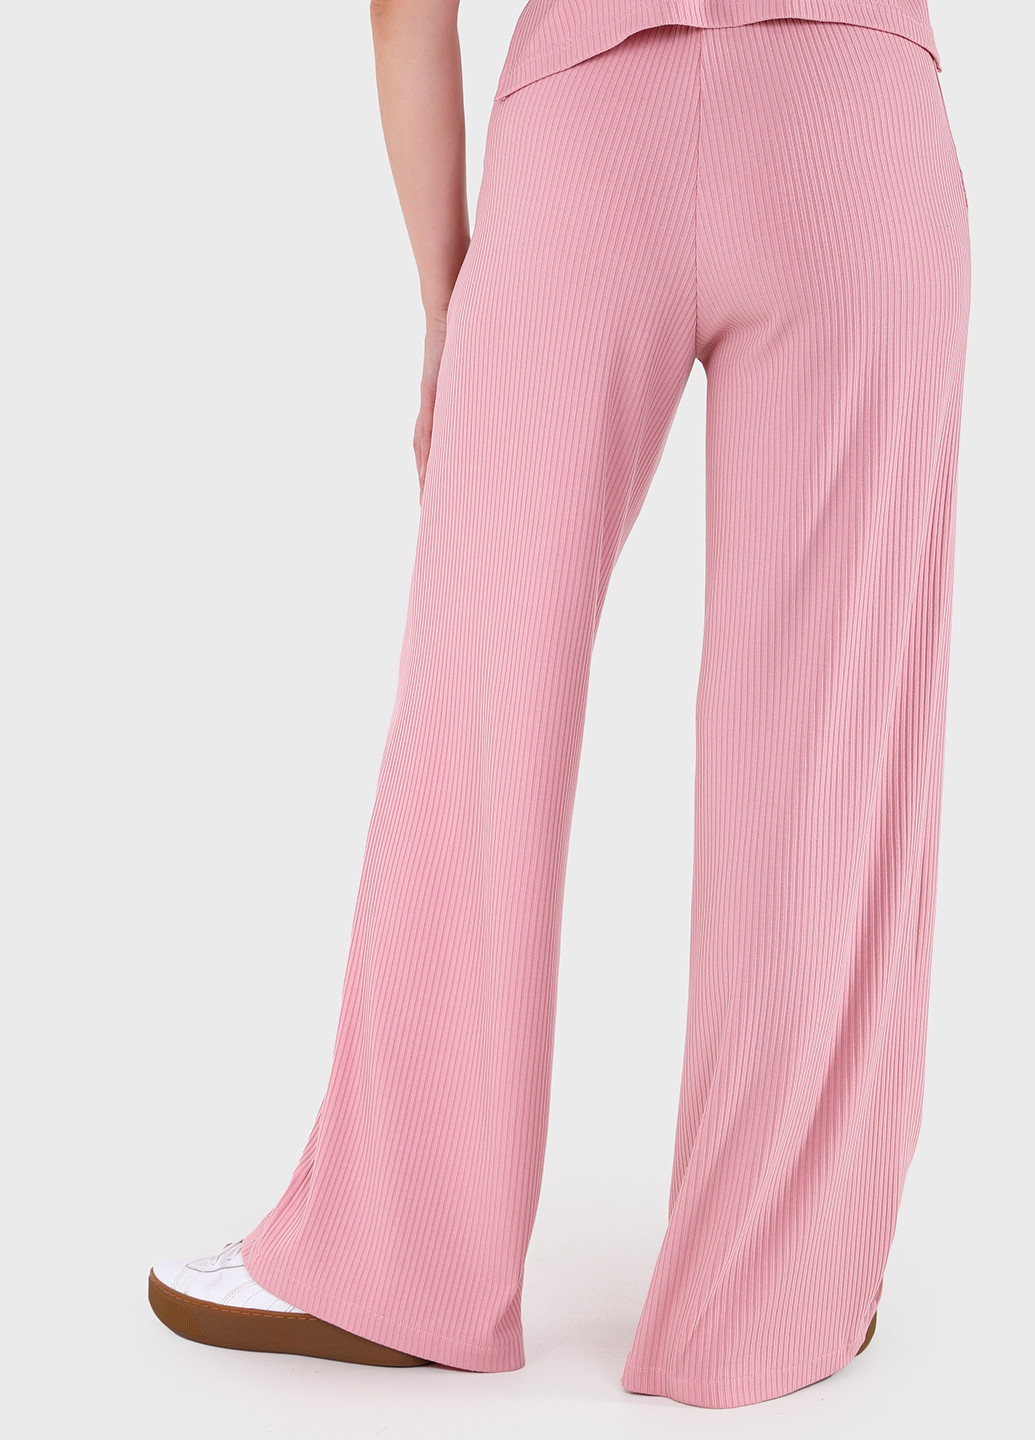 Женские брюки клеш в рубчик розового цвета 600000072 Merlini амаранти (257533411)